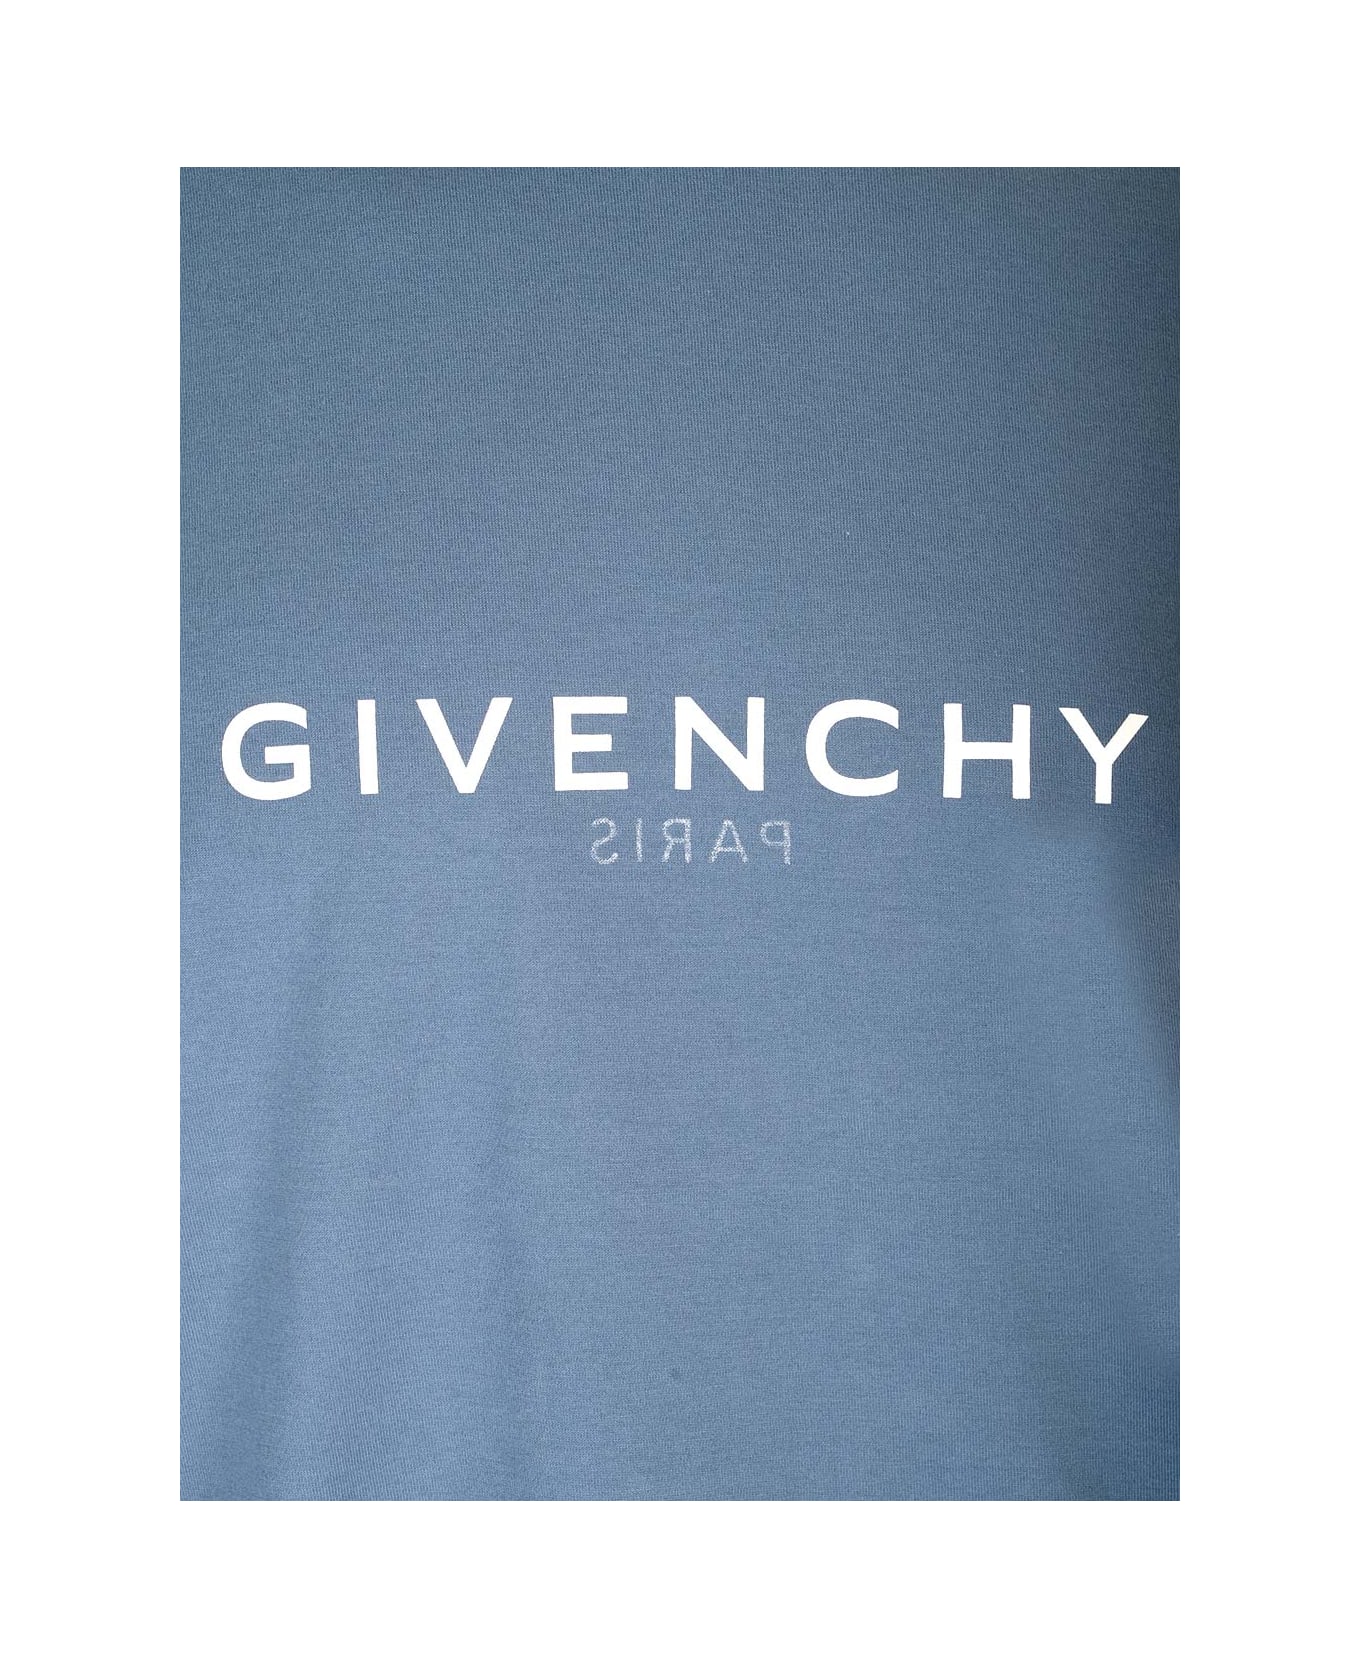 Givenchy Reverse Logo T-shirt - Blue